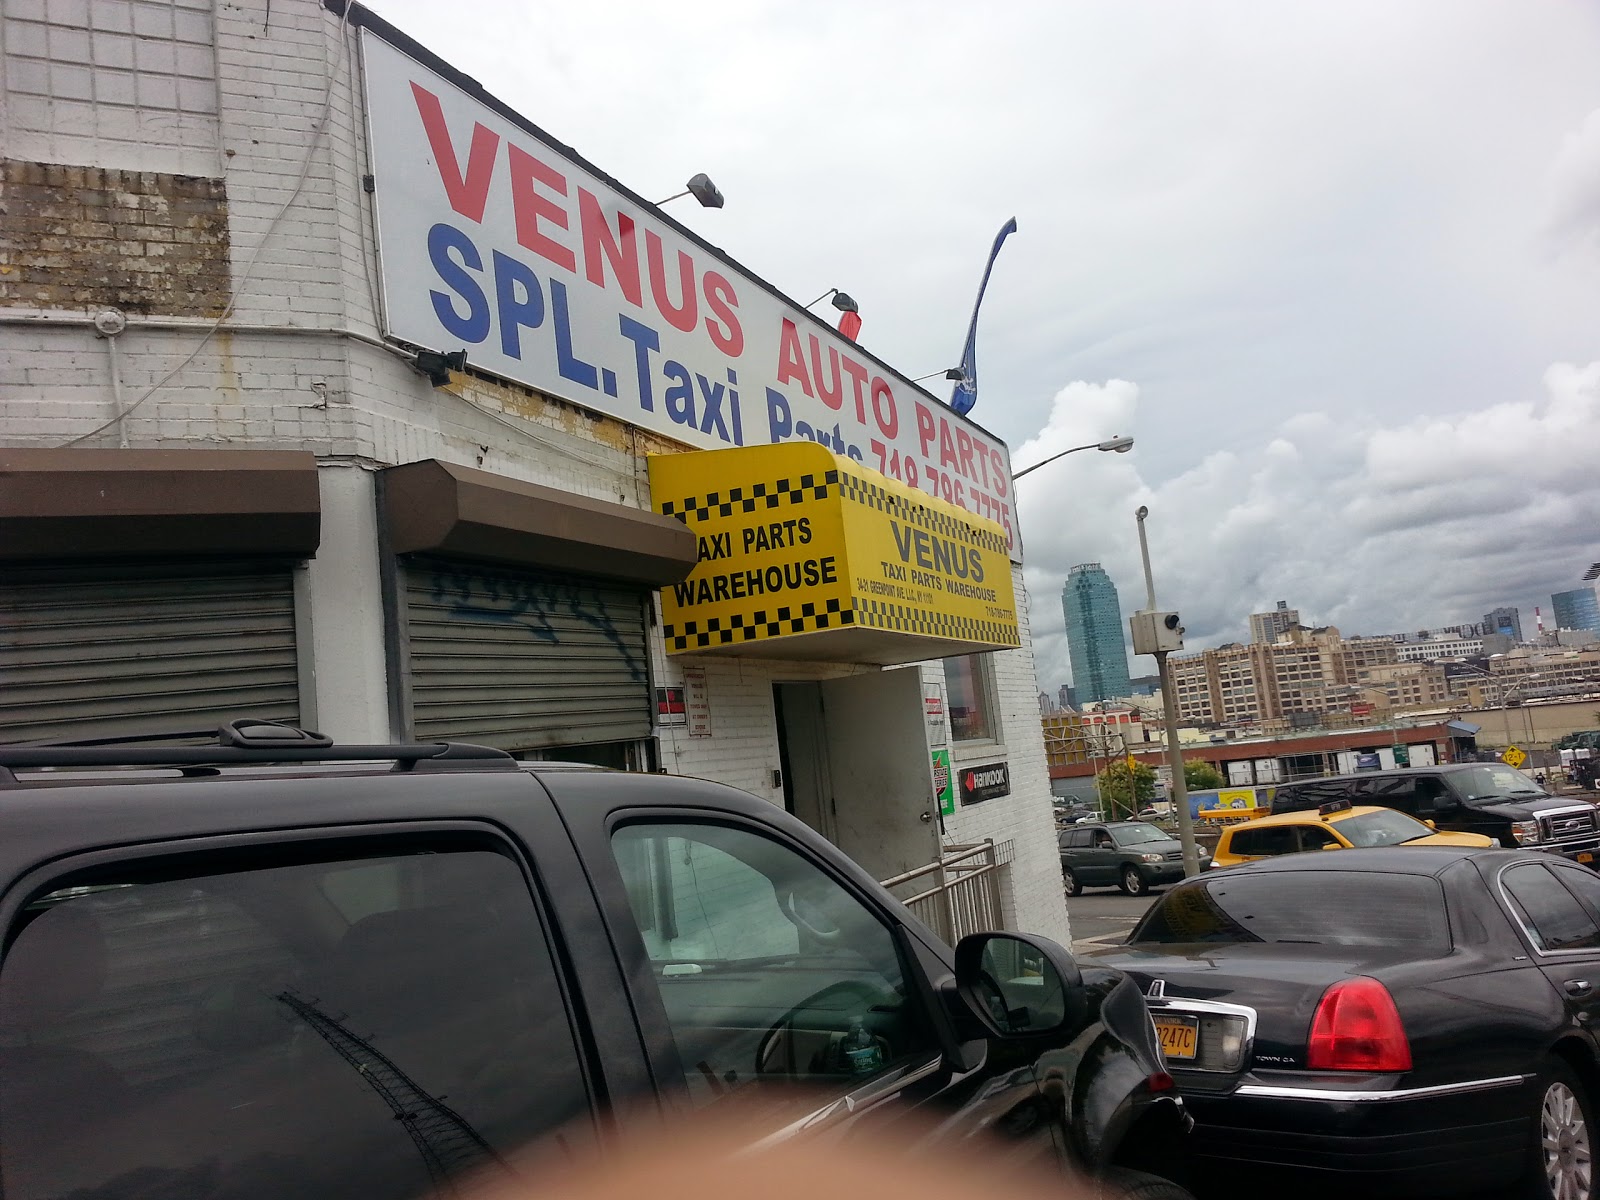 Photo of Venus Auto Parts in Queens City, New York, United States - 2 Picture of Point of interest, Establishment, Store, Car repair